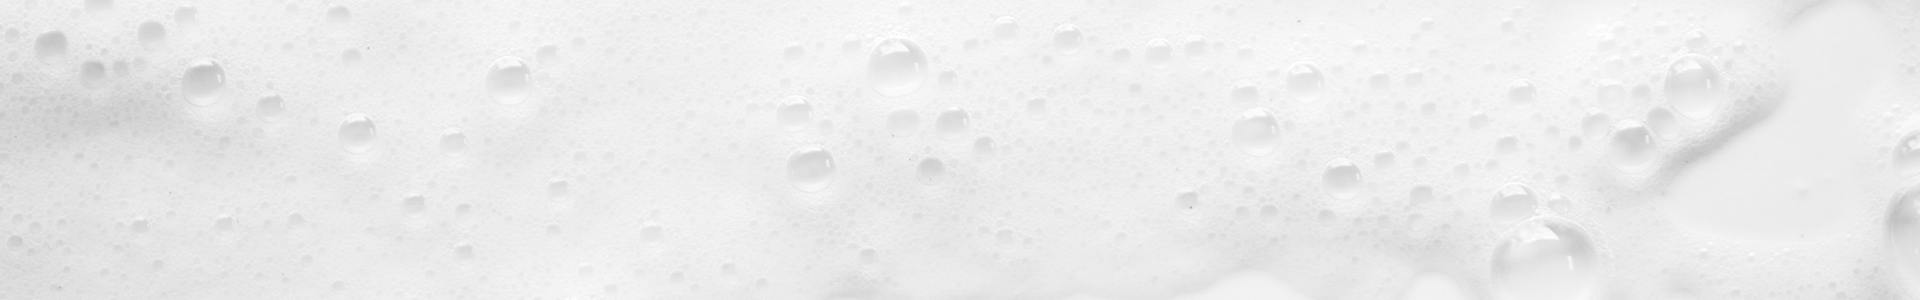 Foam with bubbles